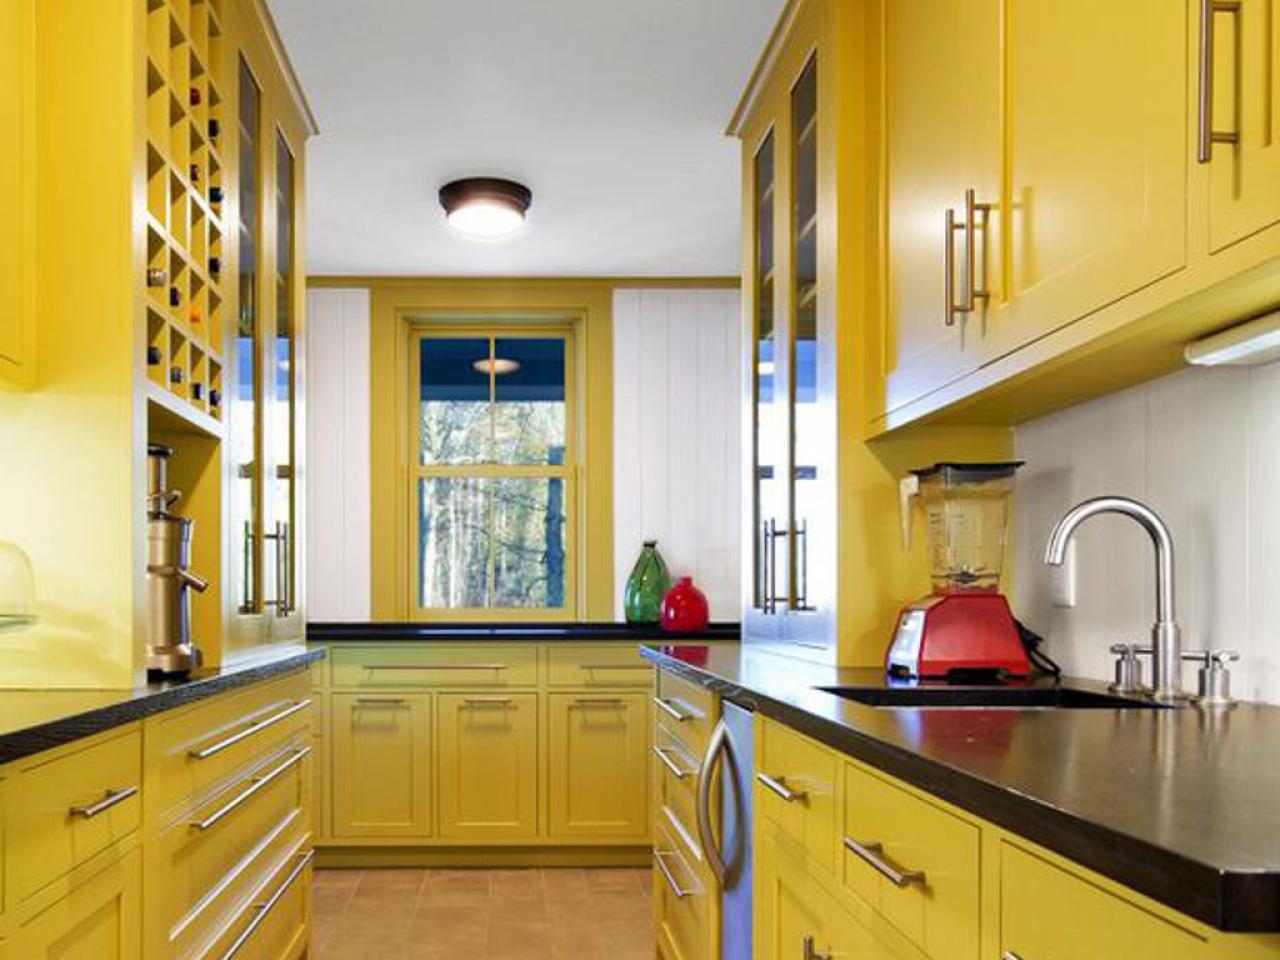 Bright yellow kitchen